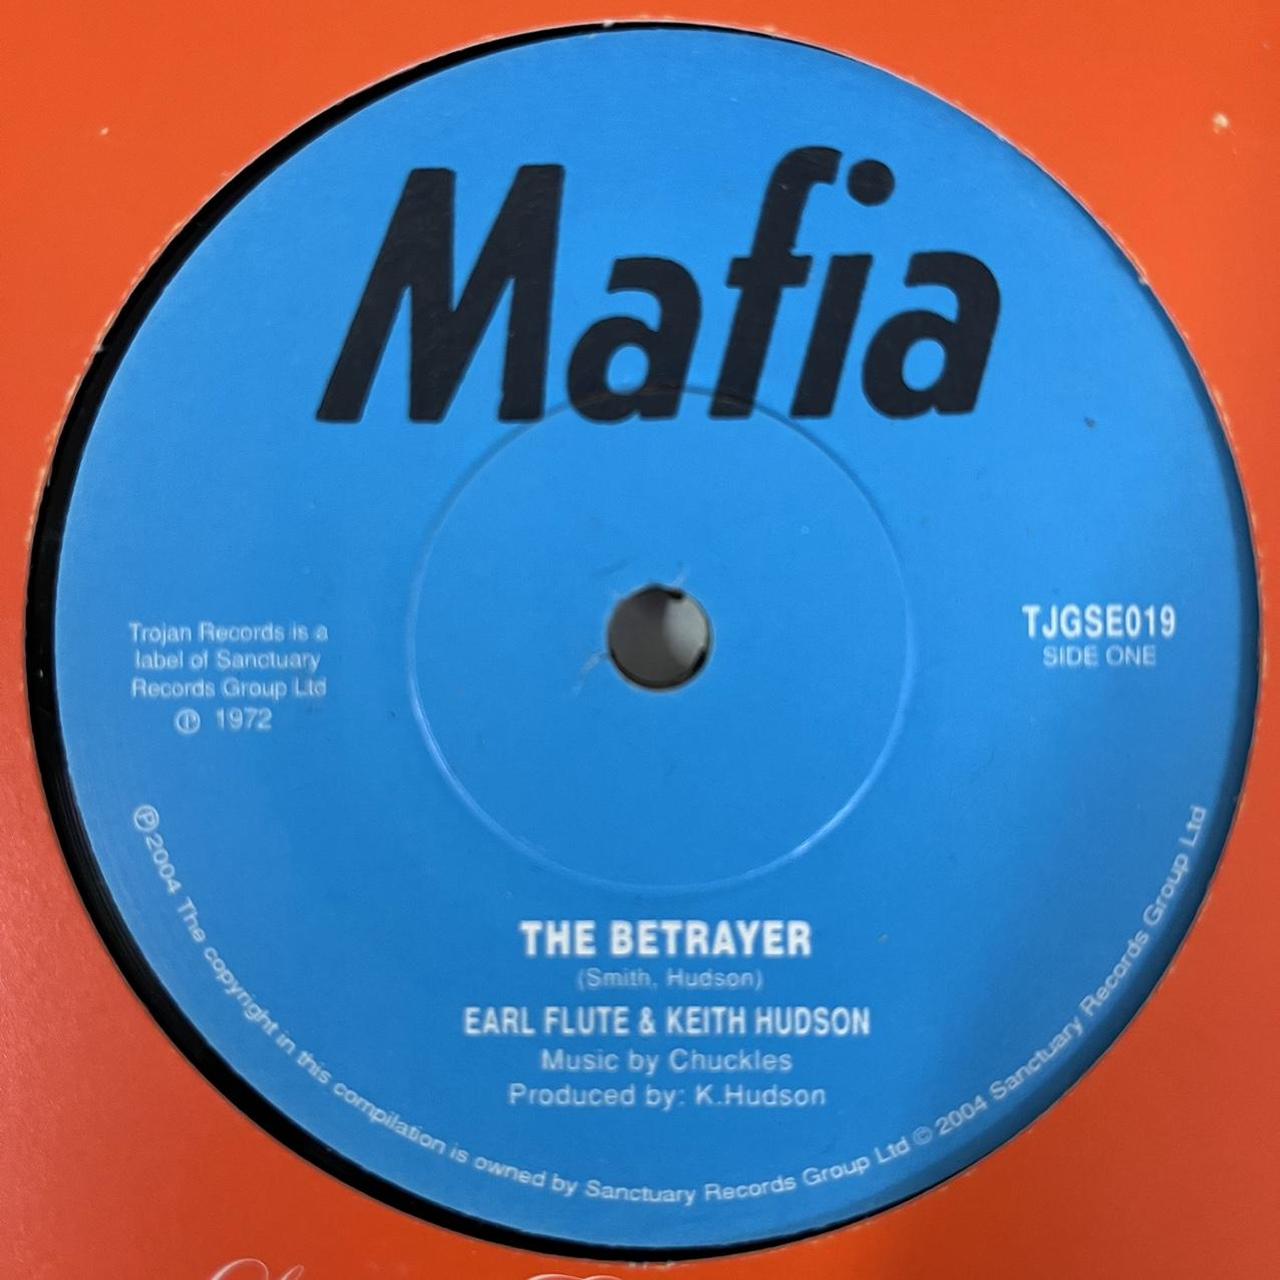 Earl Flute & Keith Hudson “The Betrayer” / “Hot Stuff” 2 Track 7inch Vinyl